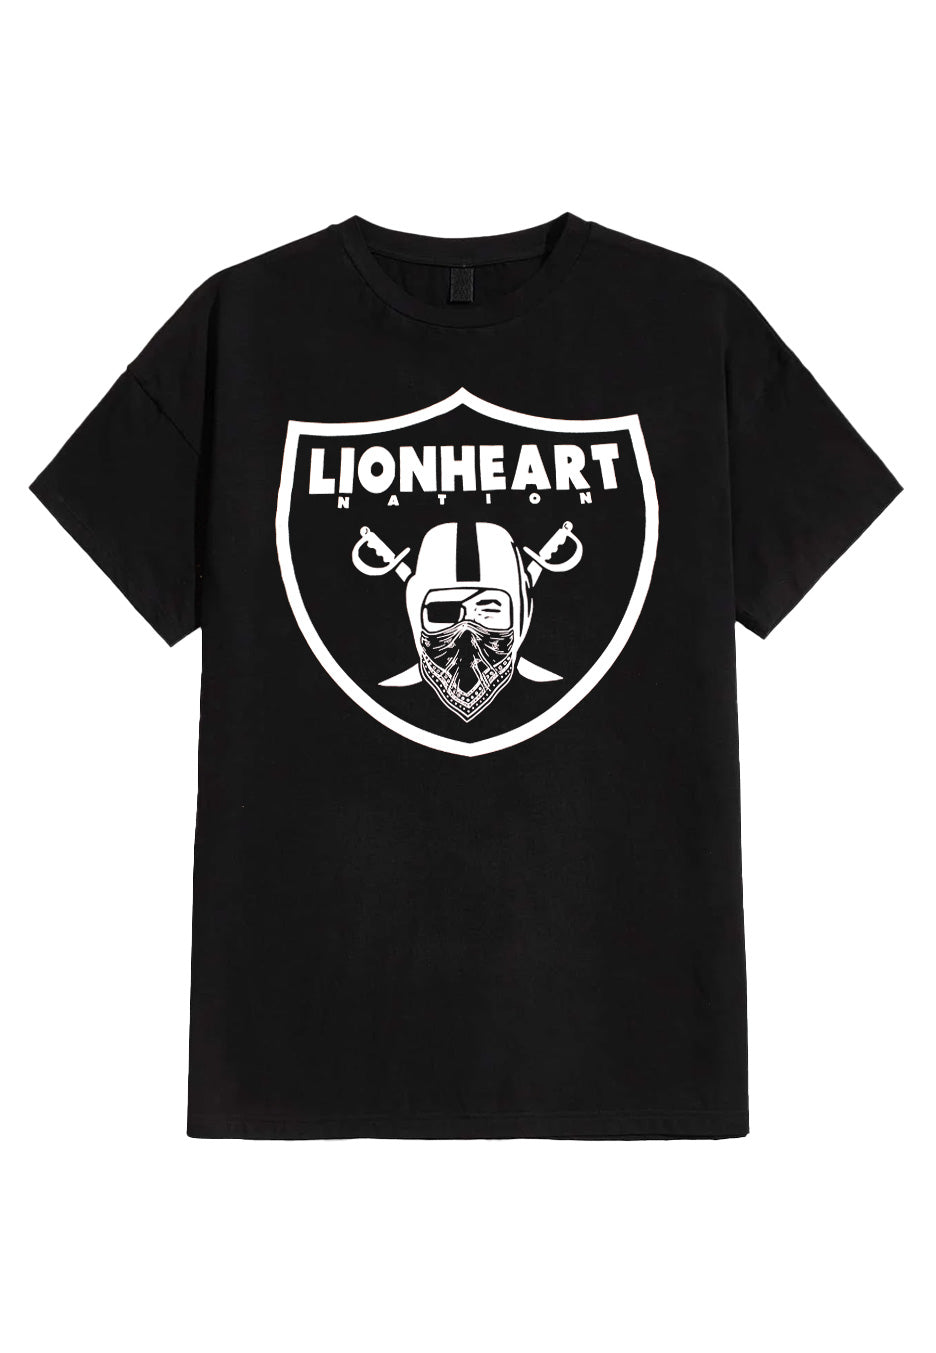 Lionheart - Bow Down - T-Shirt